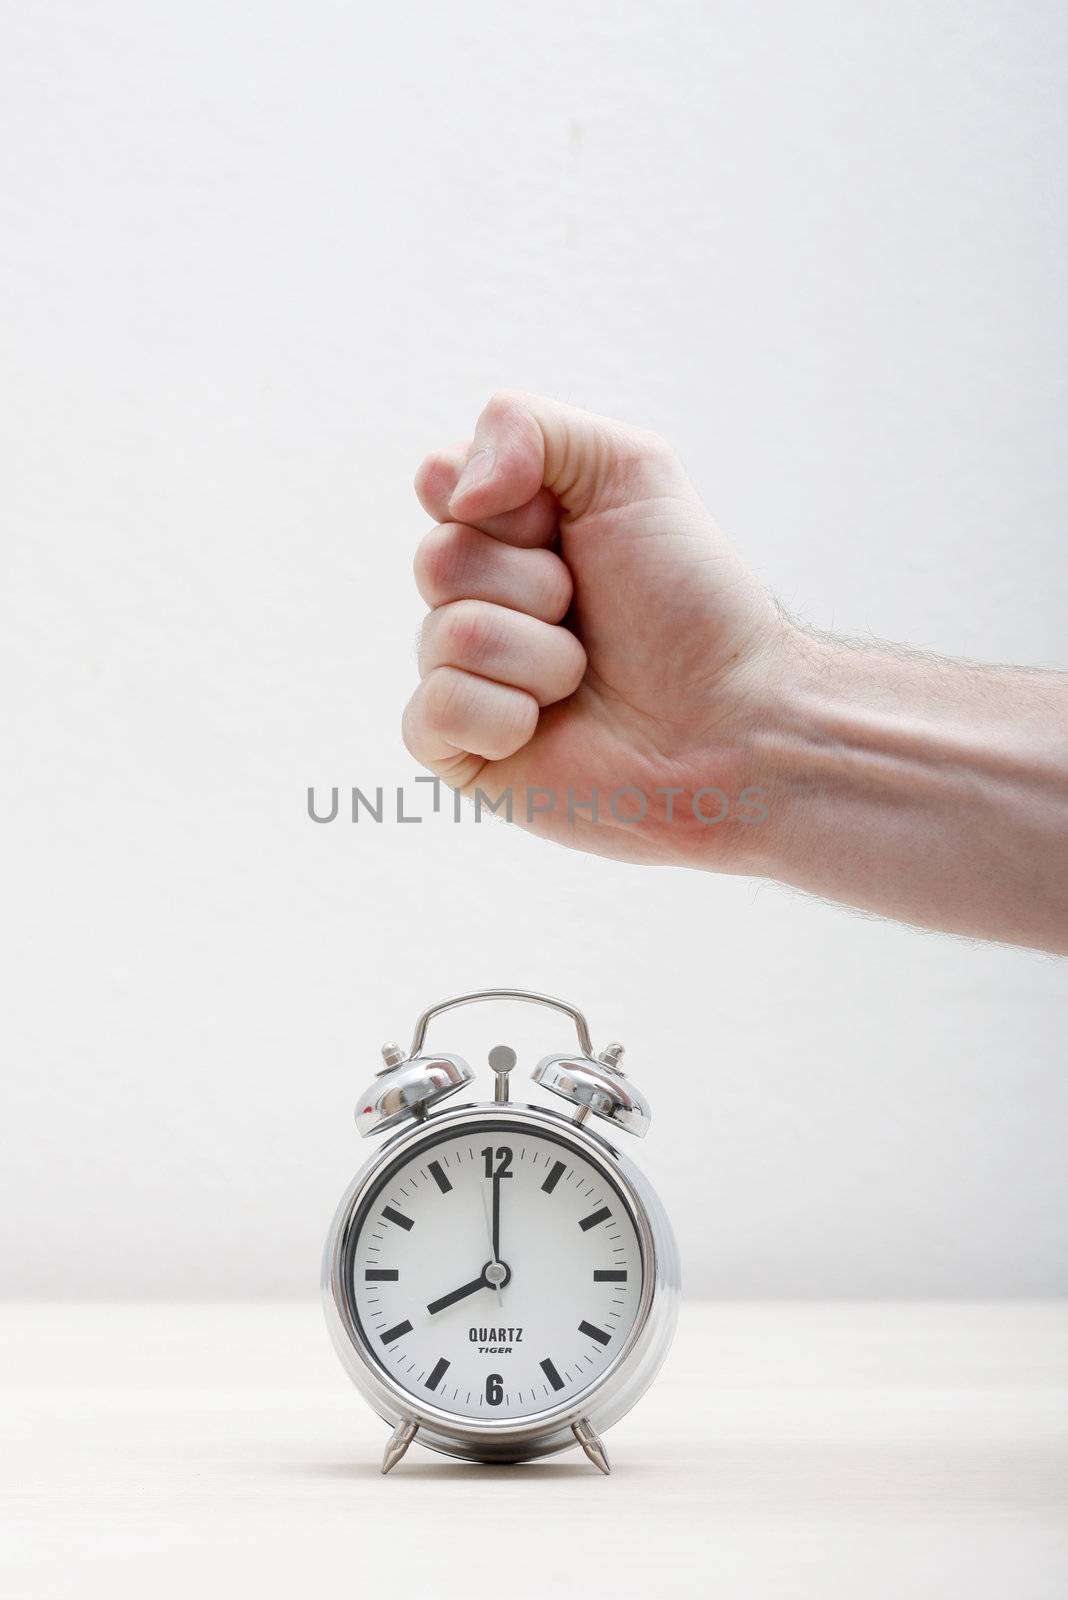 A hand breaking an alarm clock